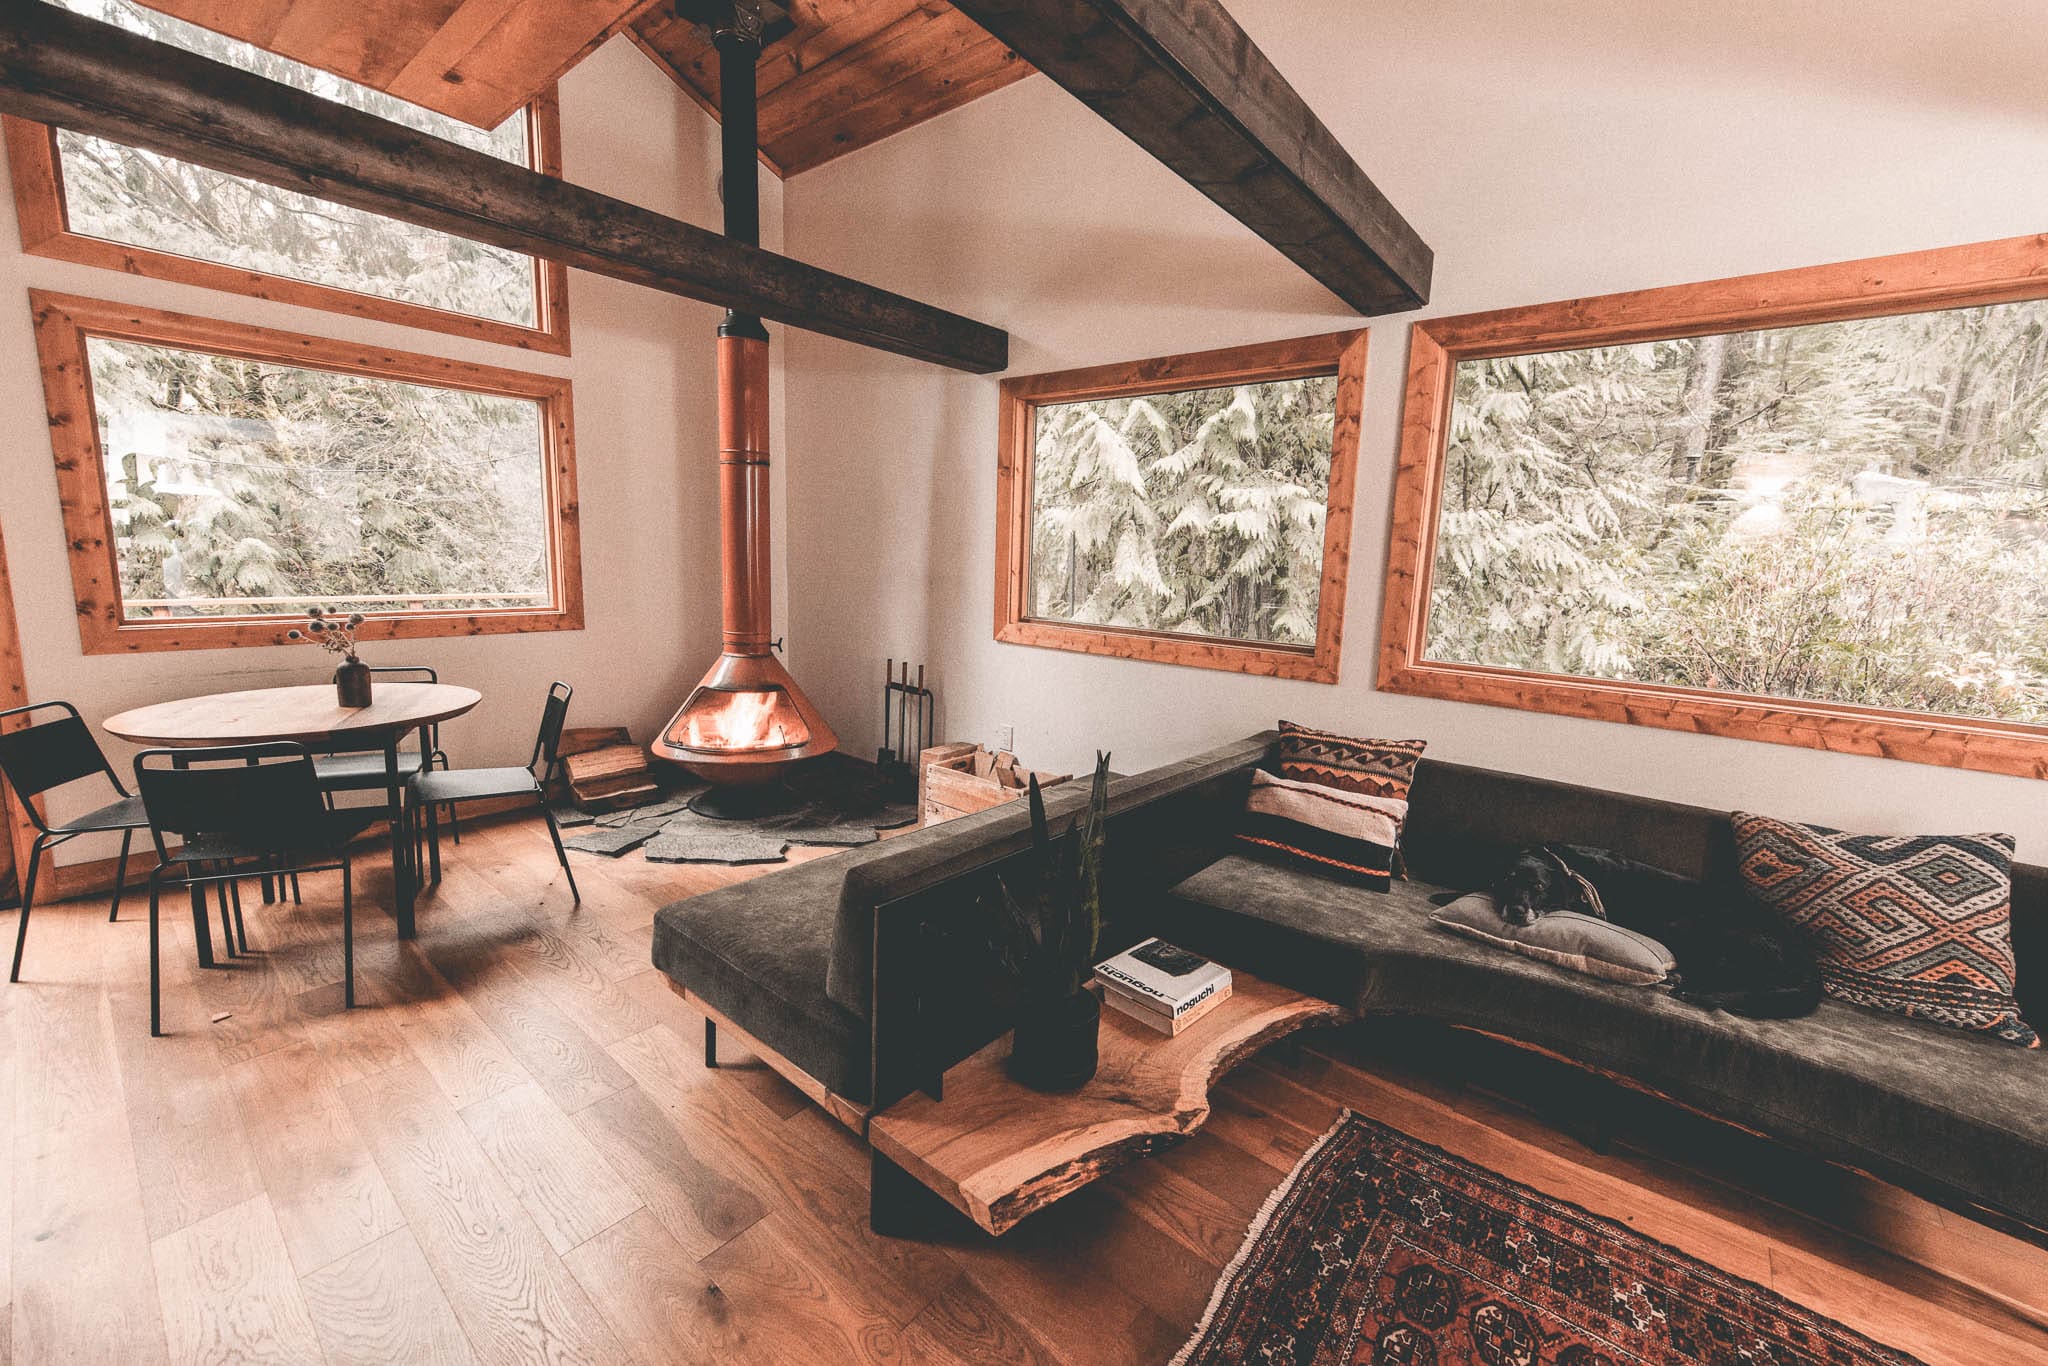 Cabin, <strong>Airbnb Finds:</strong> Amerikaanse vissershut omgetoverd tot luxe optrekje